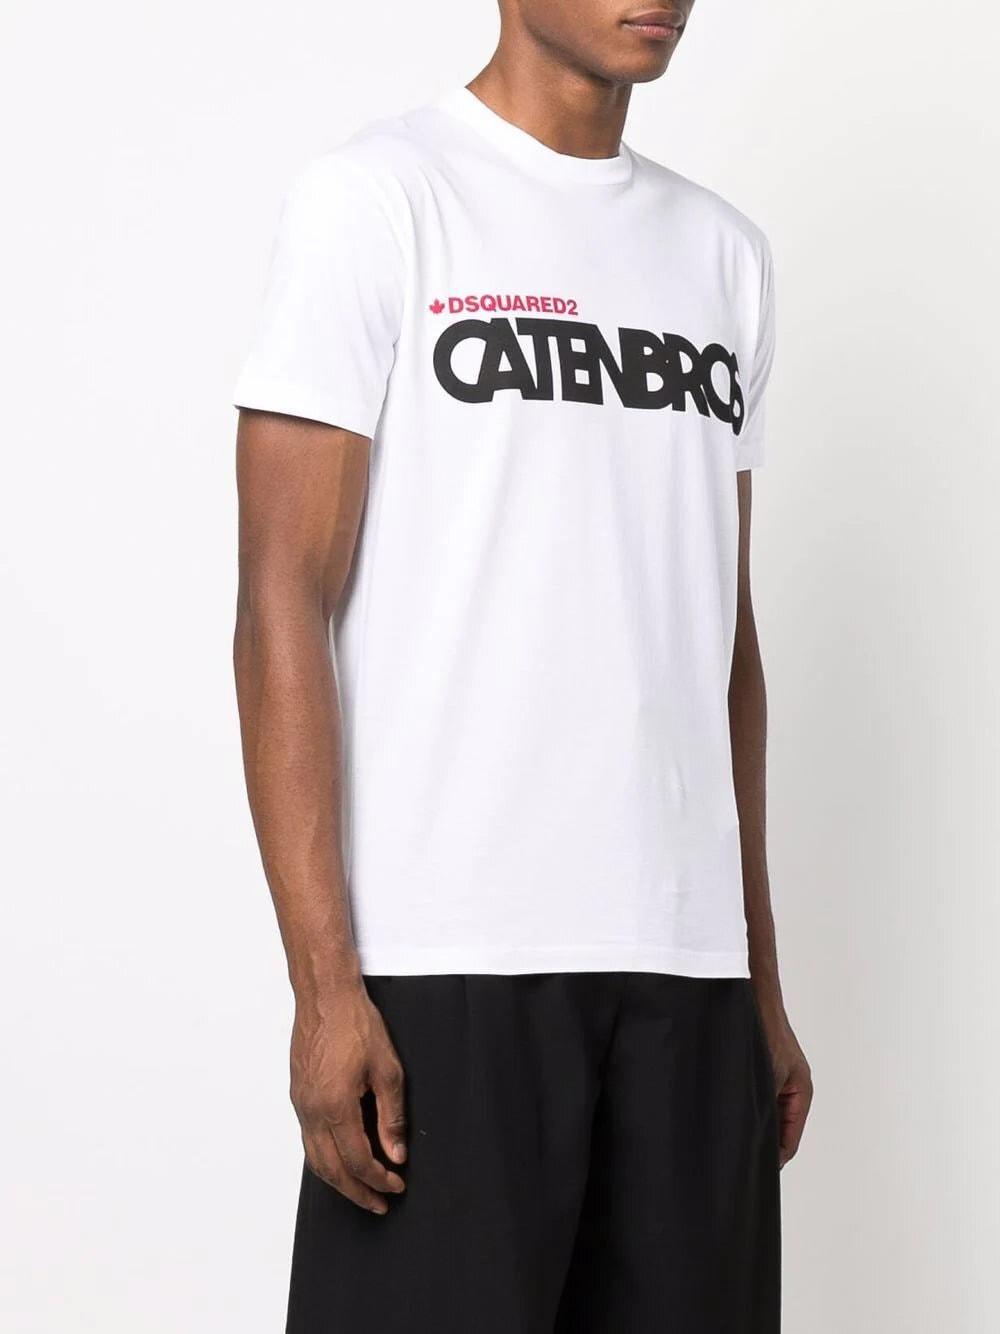 DSquared² Caten Bros Print T-shirt in White for Men | Lyst